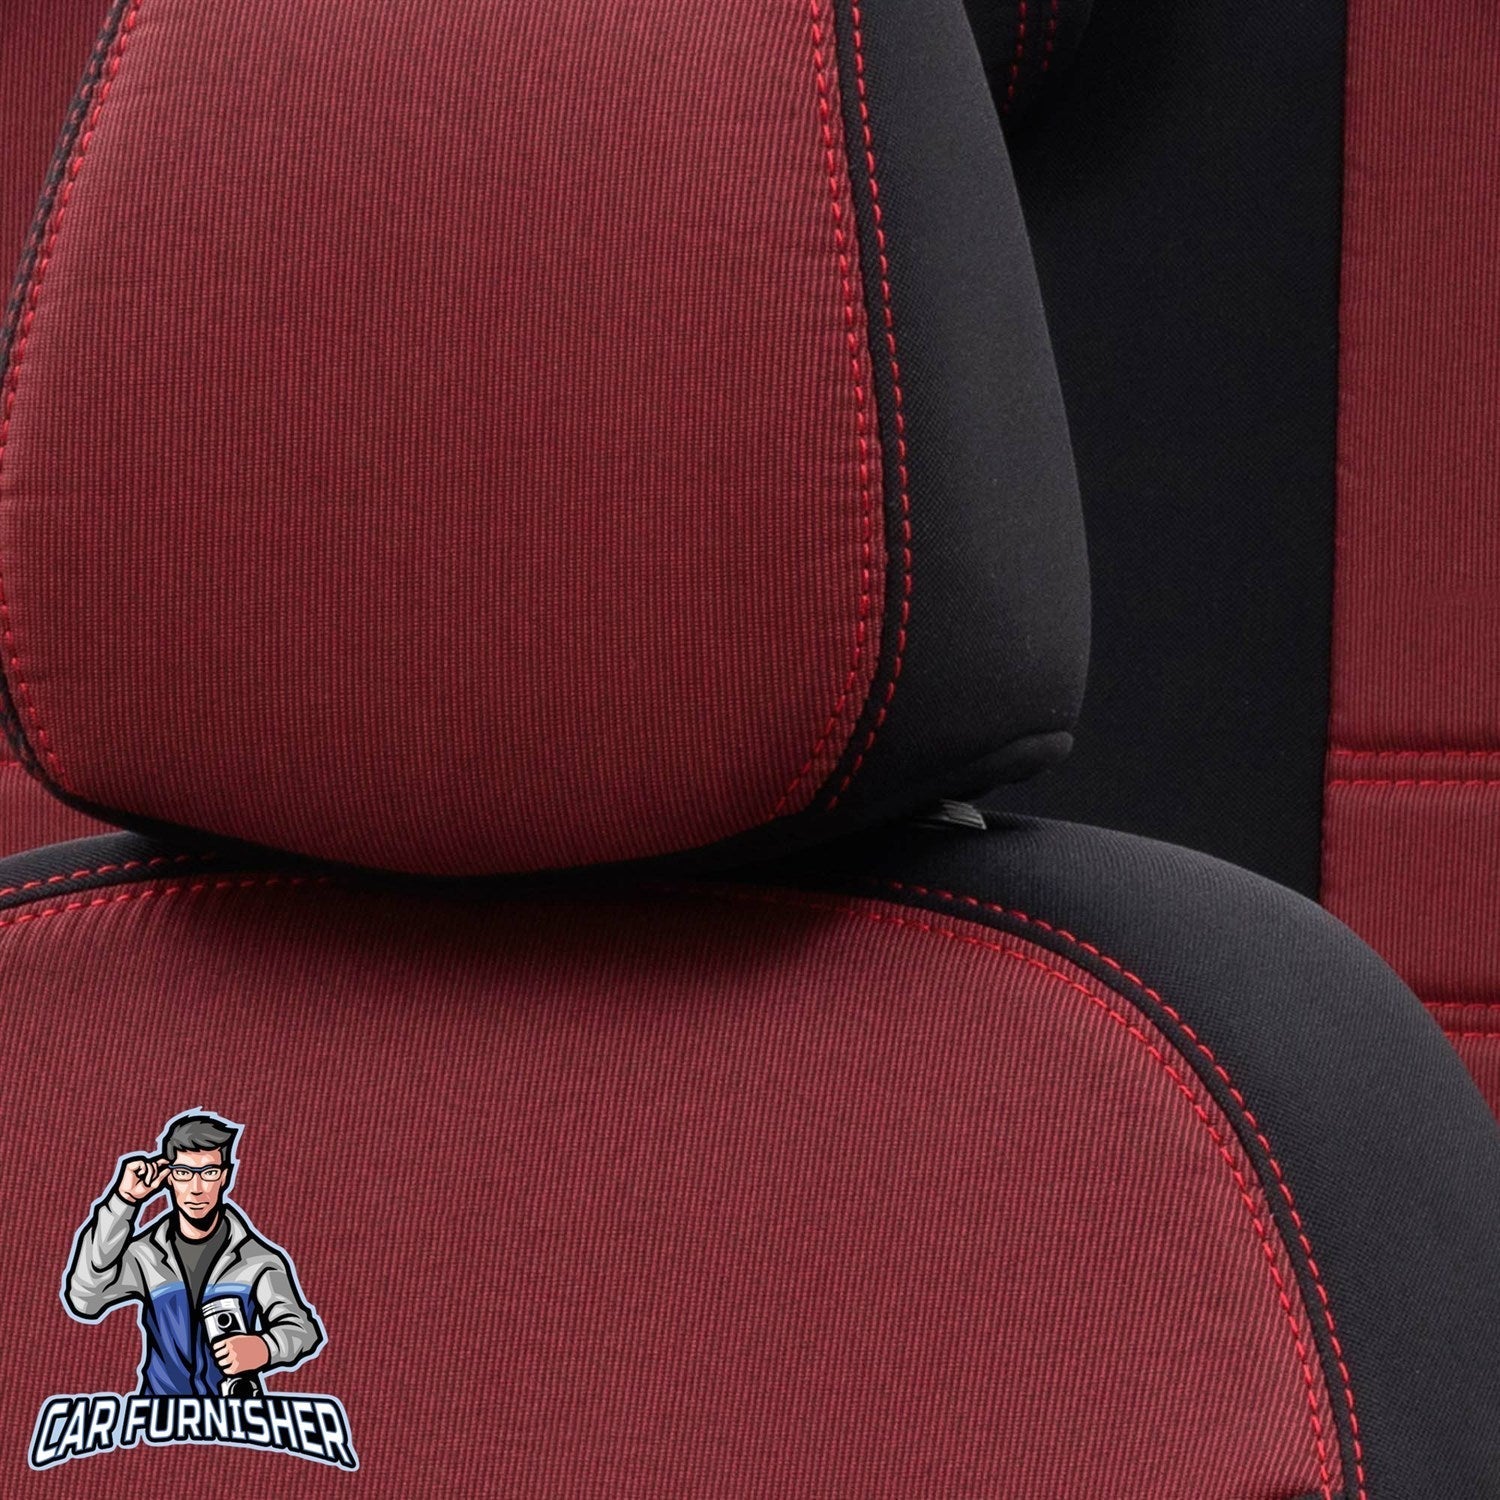 Mitsubishi Spacestar Seat Cover Original Jacquard Design Red Jacquard Fabric